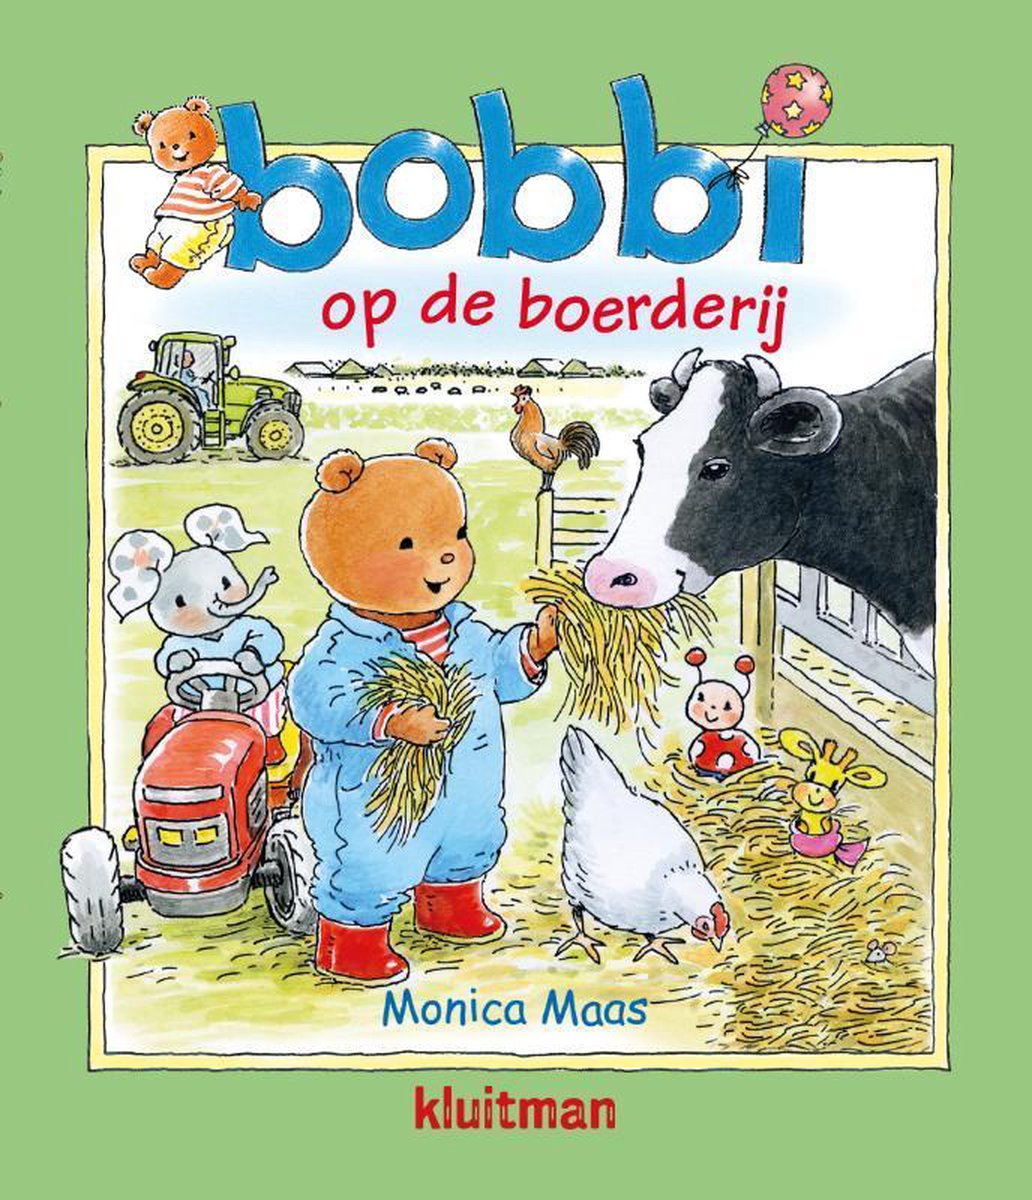 Bobbi - Bobbi op de boerderij - Monica Maas